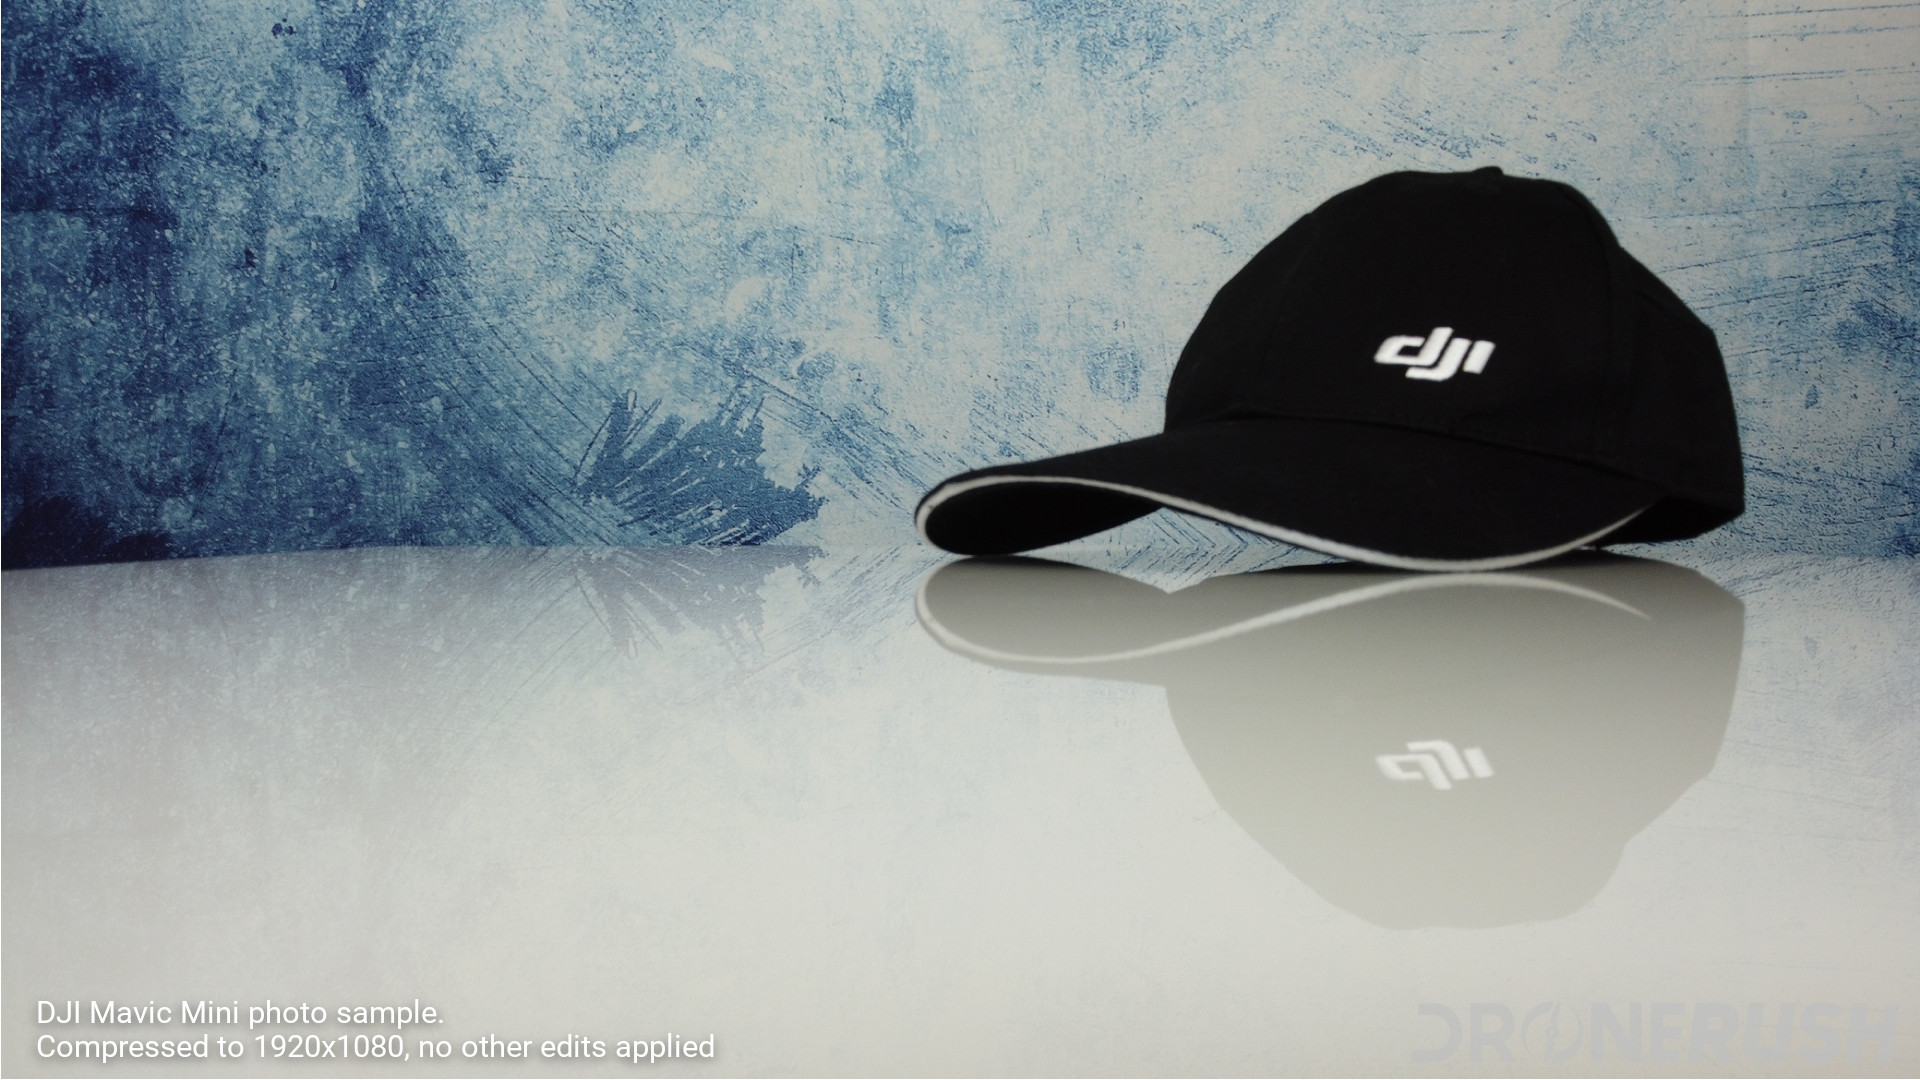 DJI Mavic Mini photo sample indoors hat